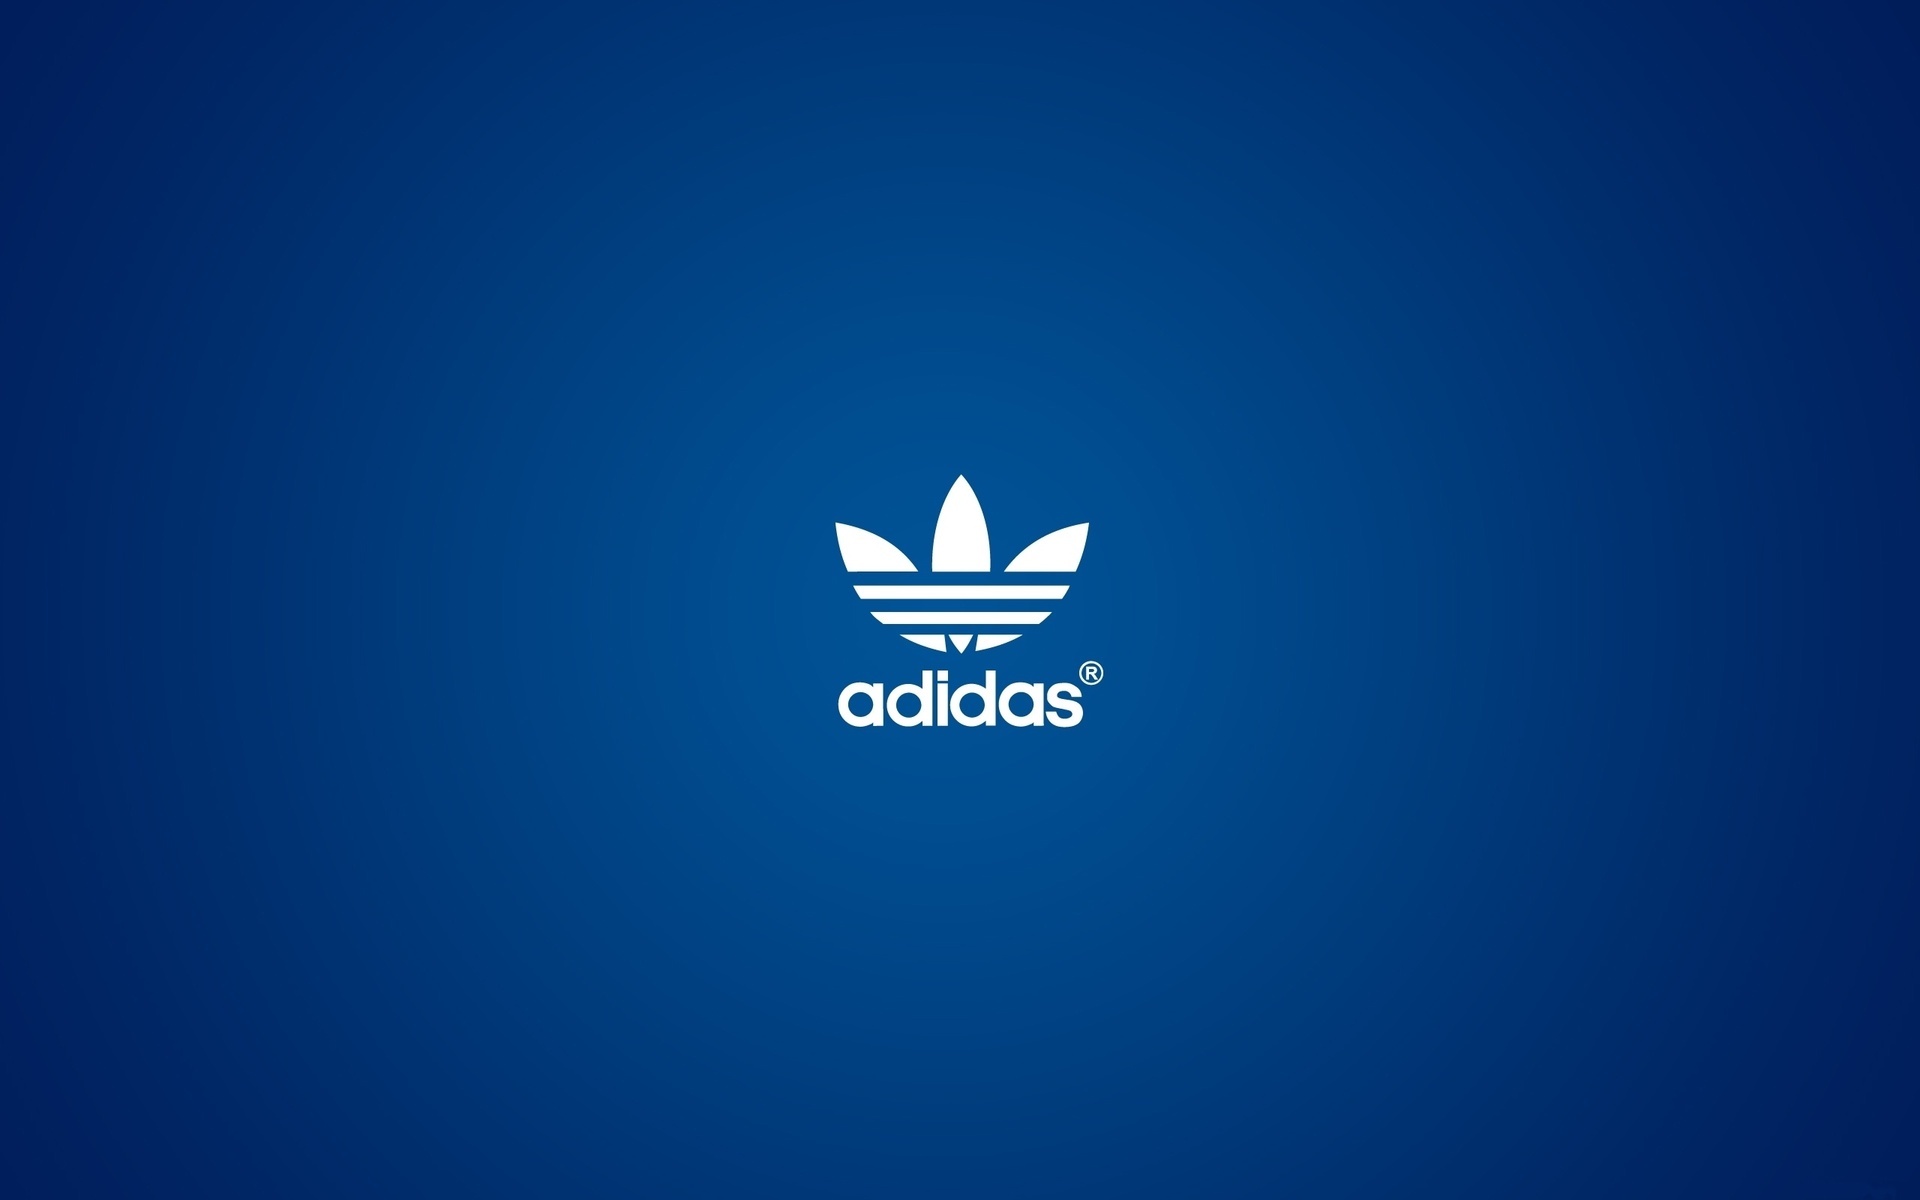 logos, adidas, blue, background